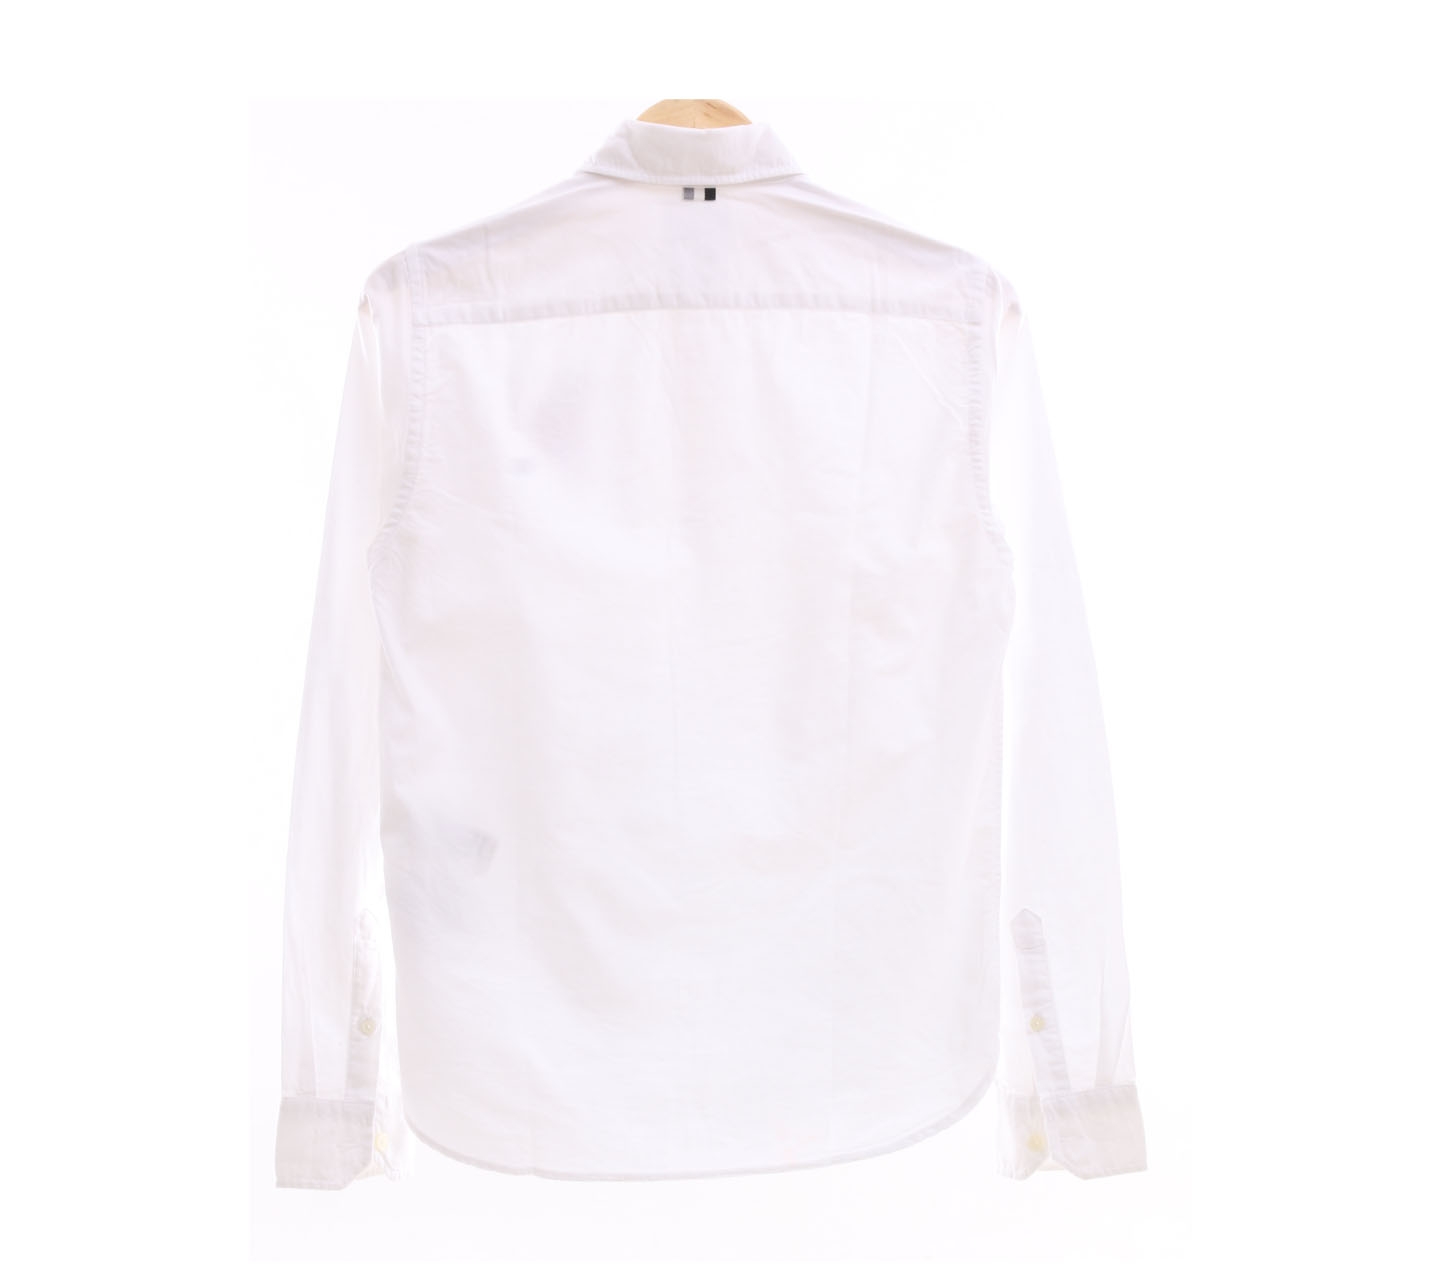 Chocoolate White Patches Shirt